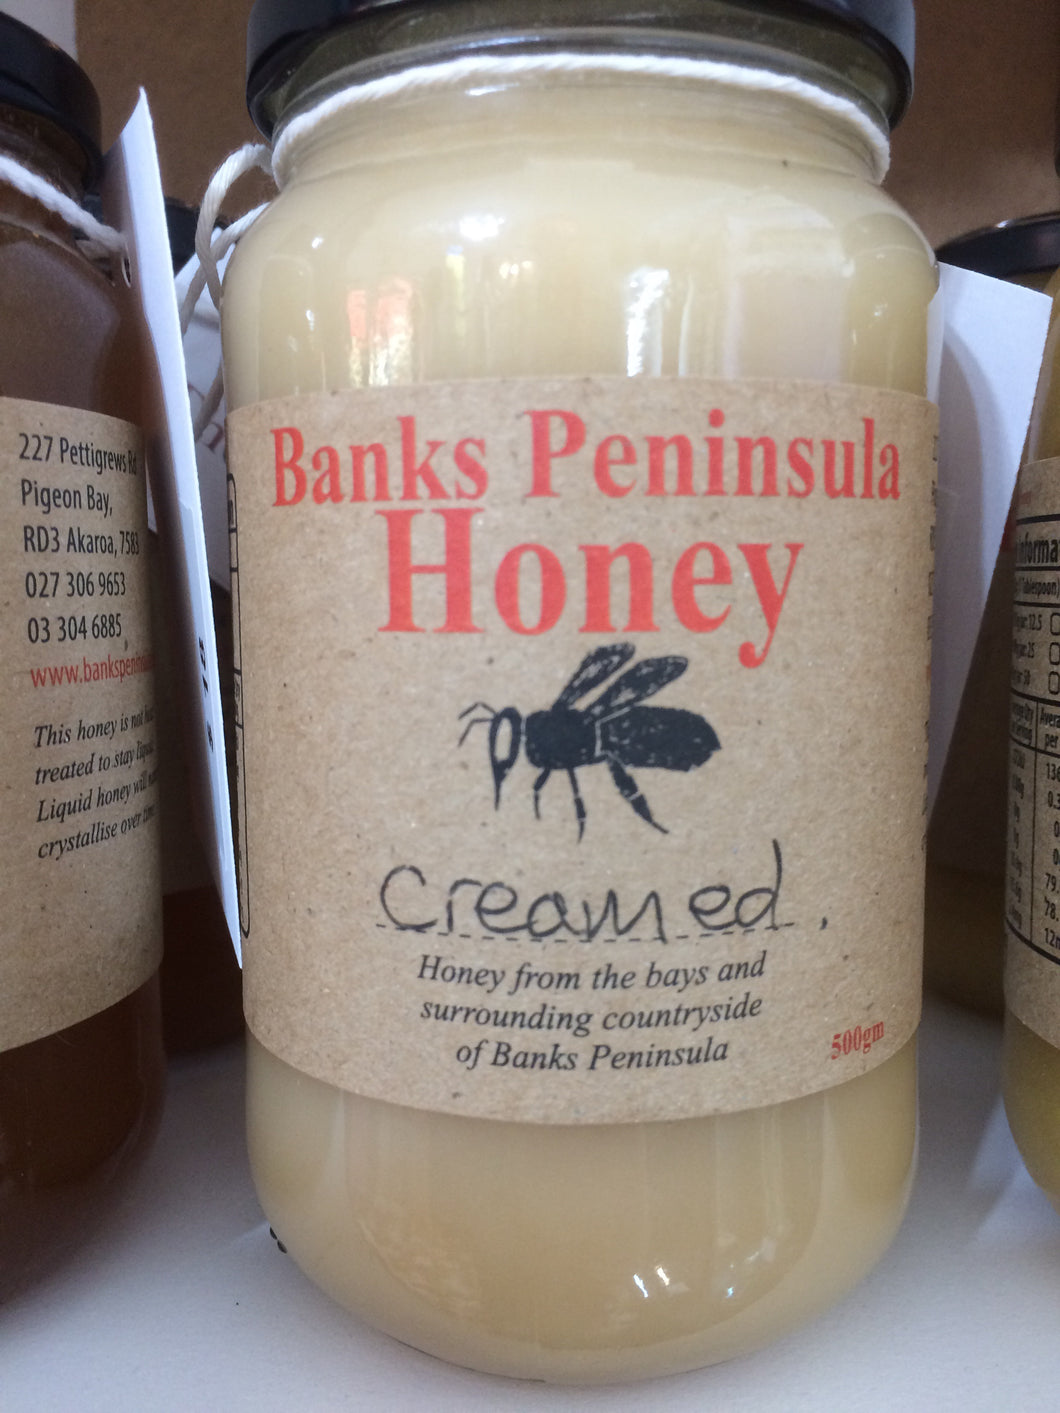 Banks Peninsula honey - Creamed